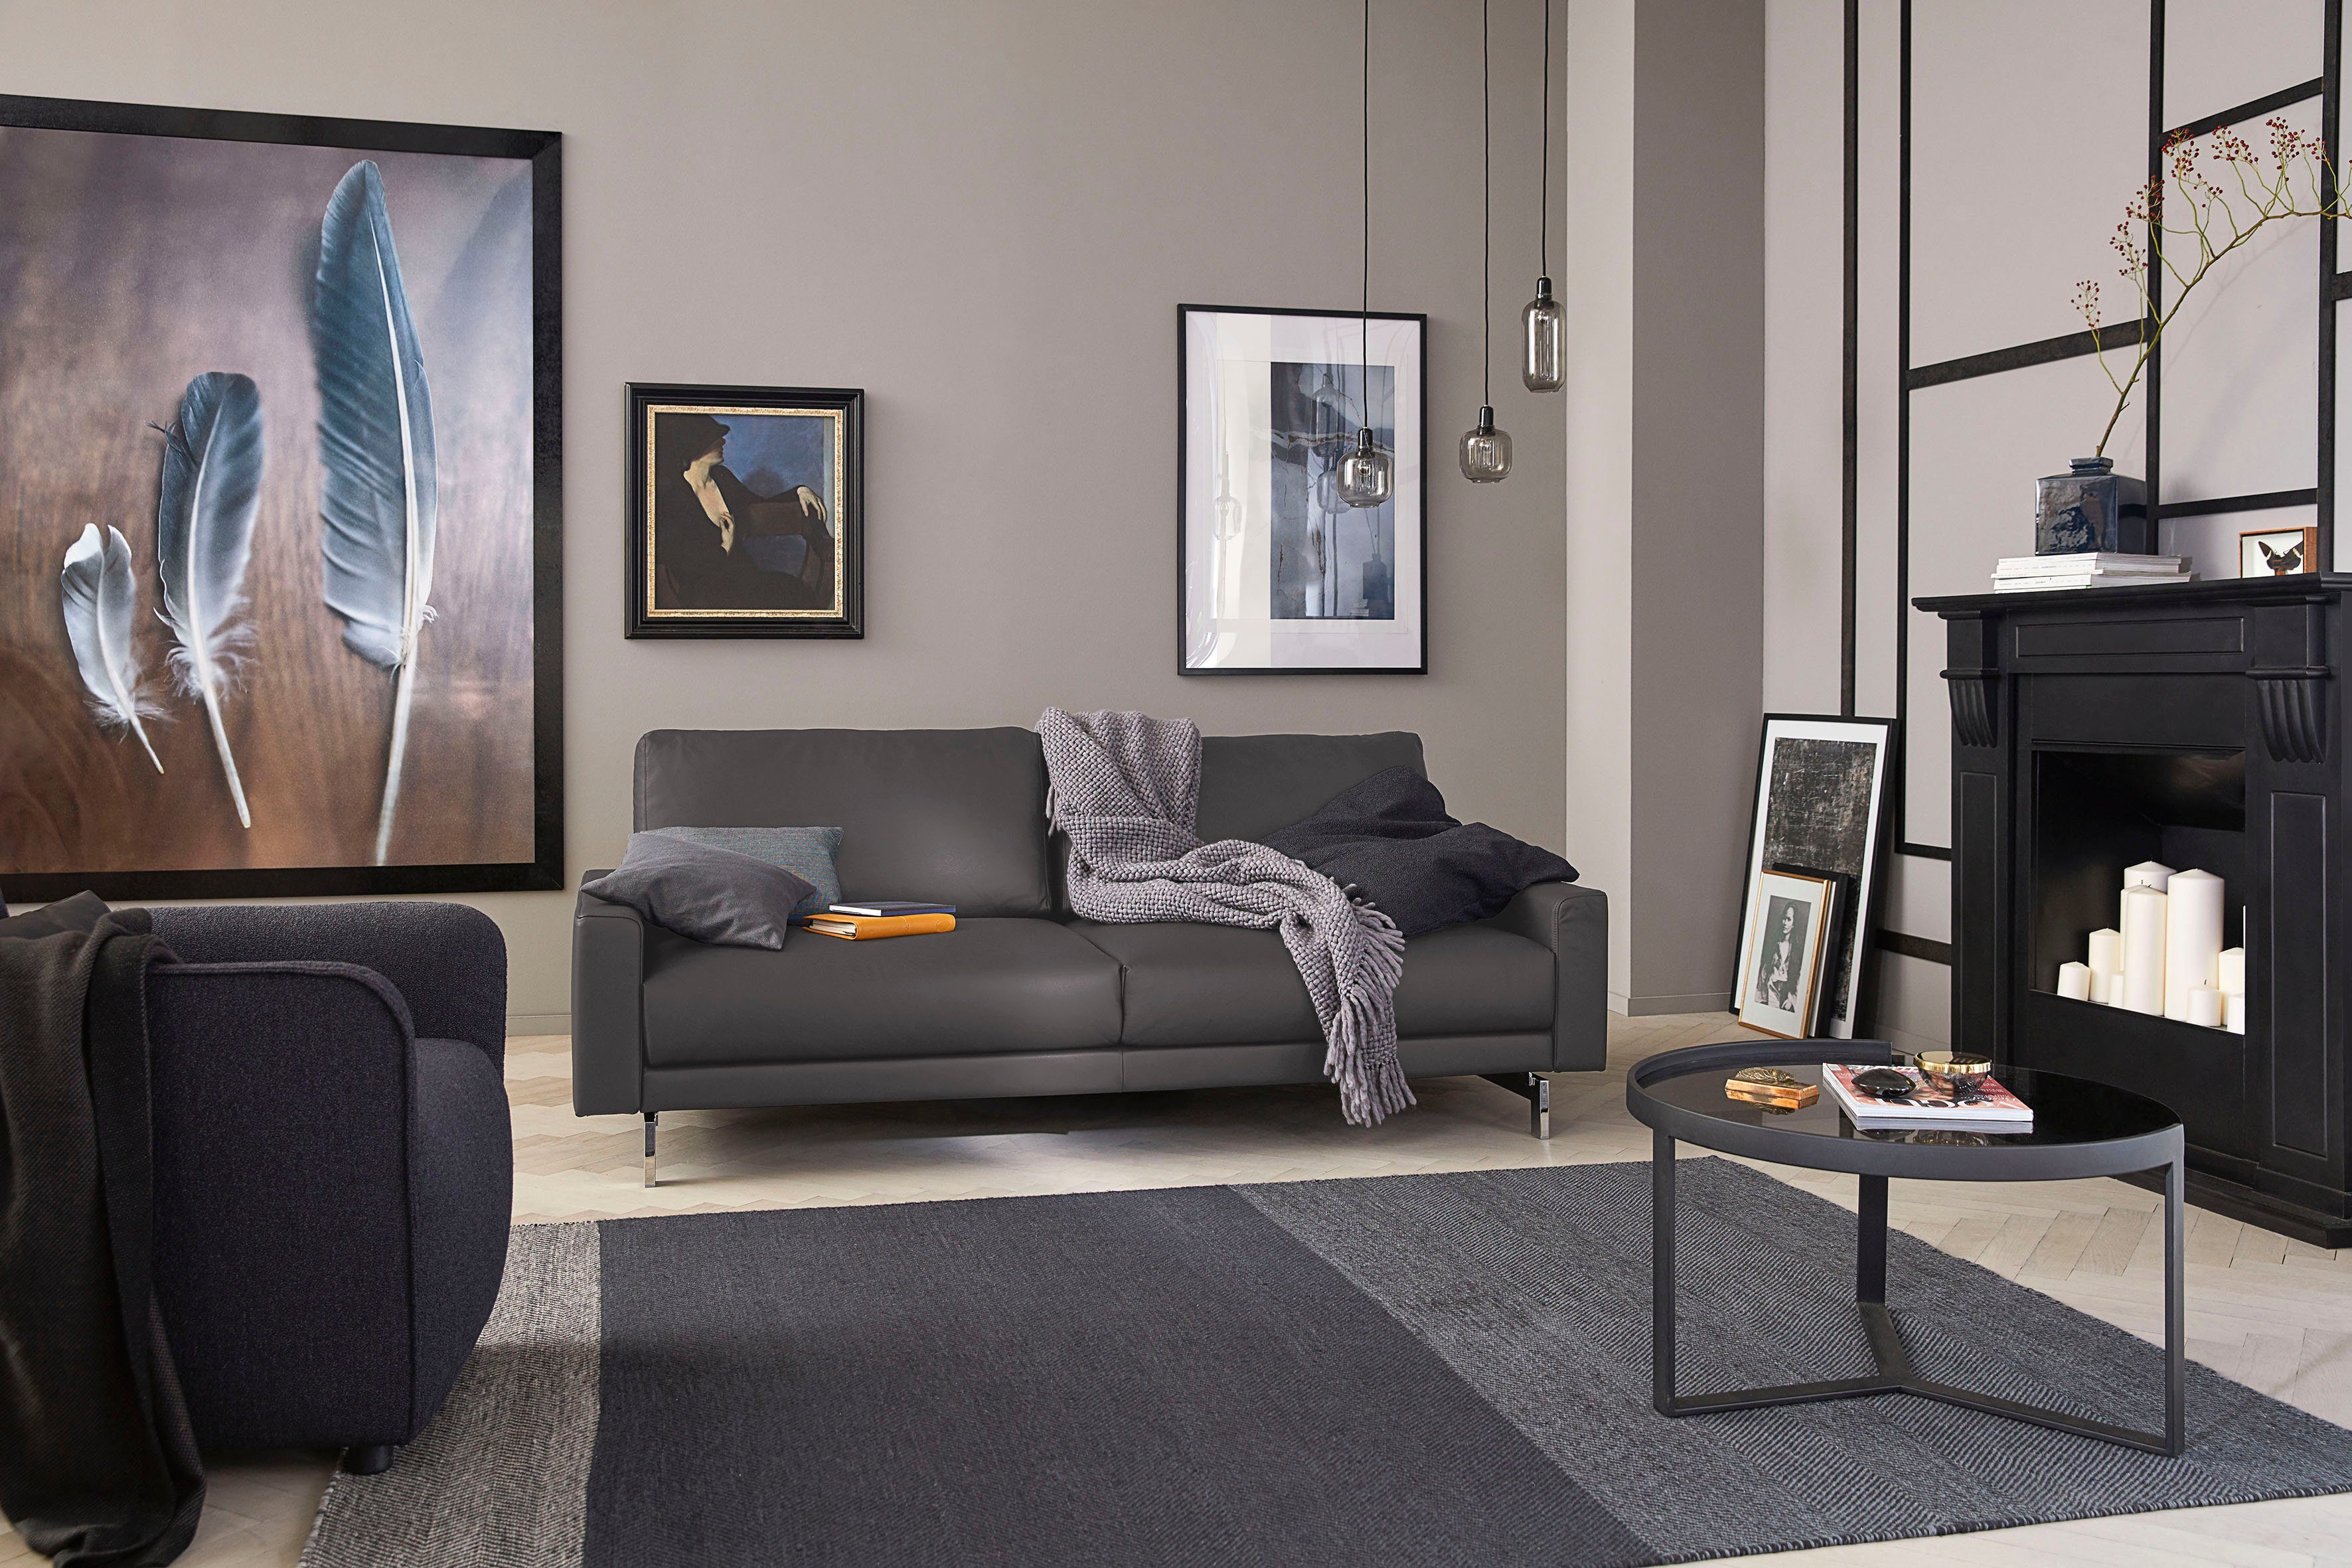 niedrig, hs.450, cm glänzend, Armlehne sofa 3-Sitzer hülsta Fuß Breite chromfarben 204